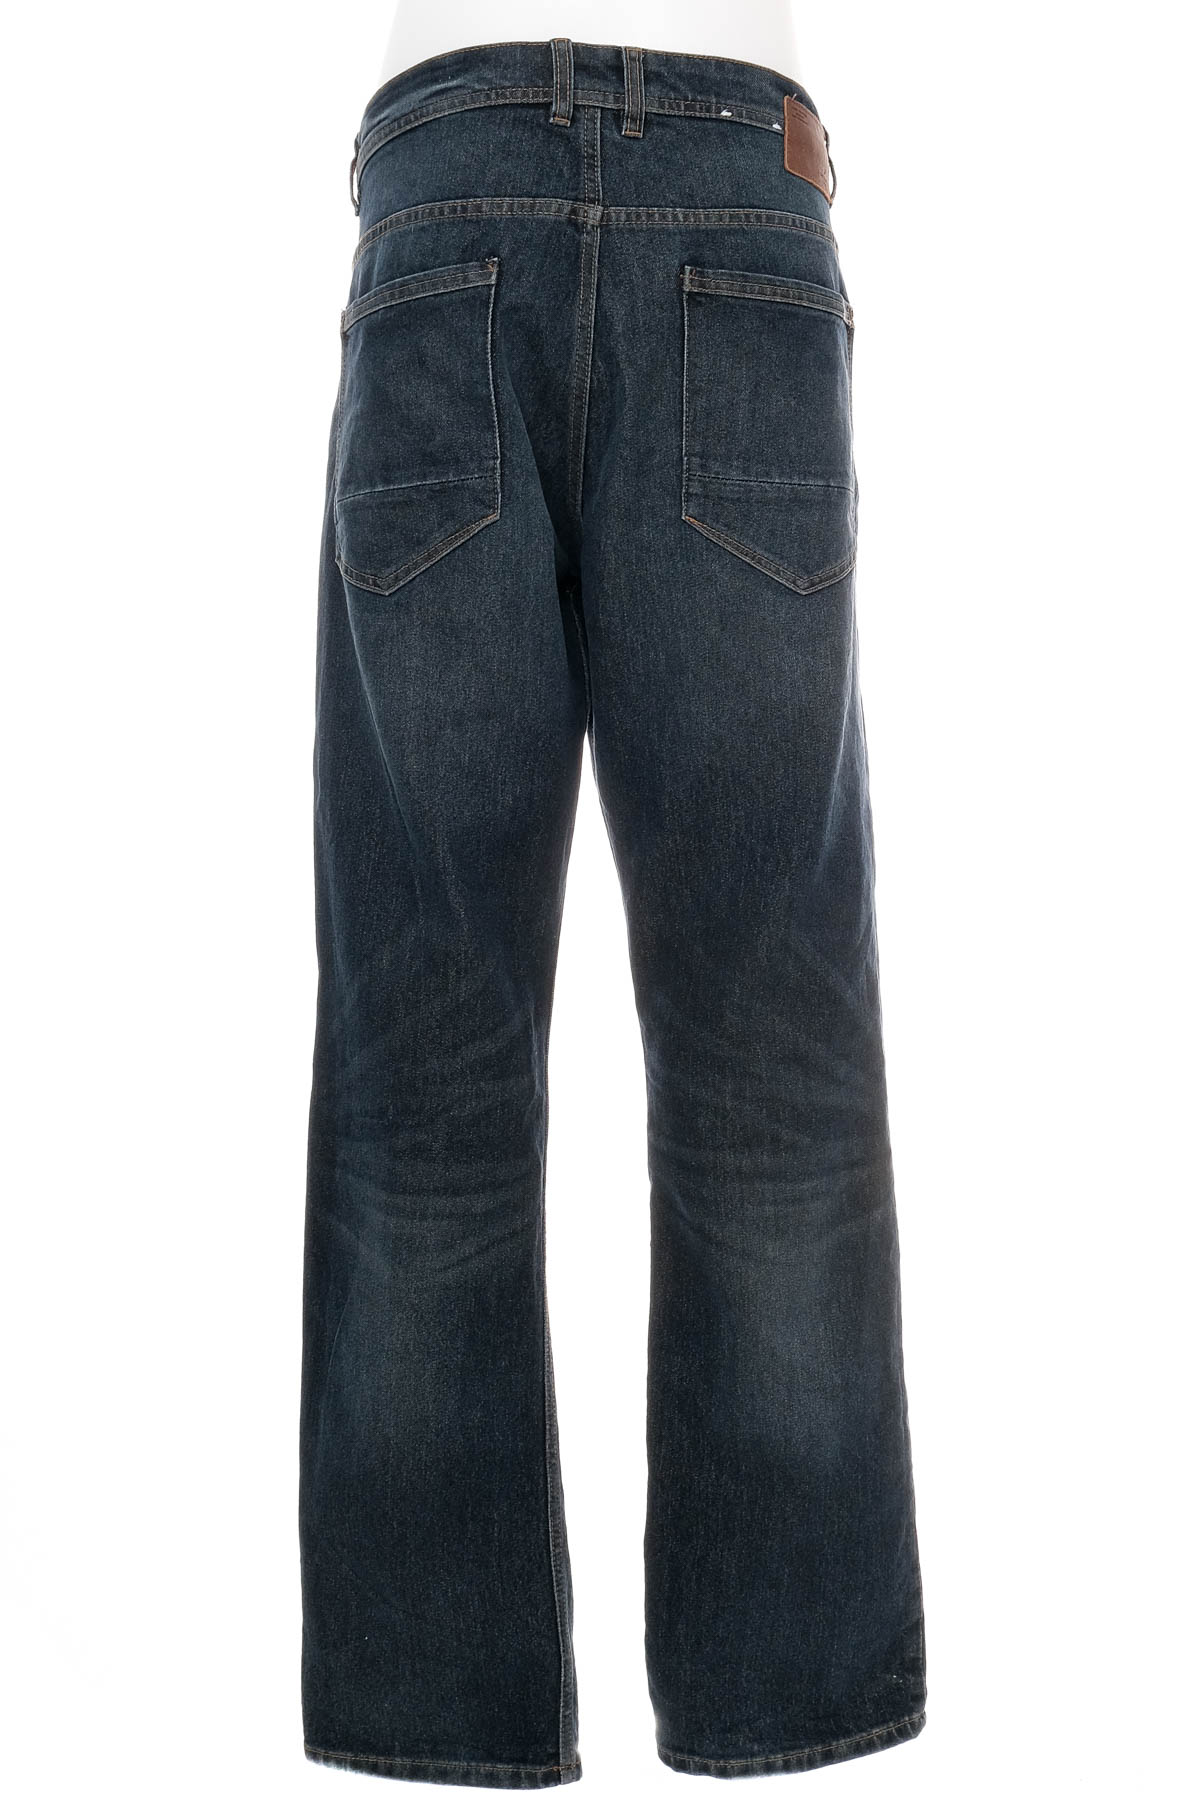 Men's jeans - TOM TAILOR - 1